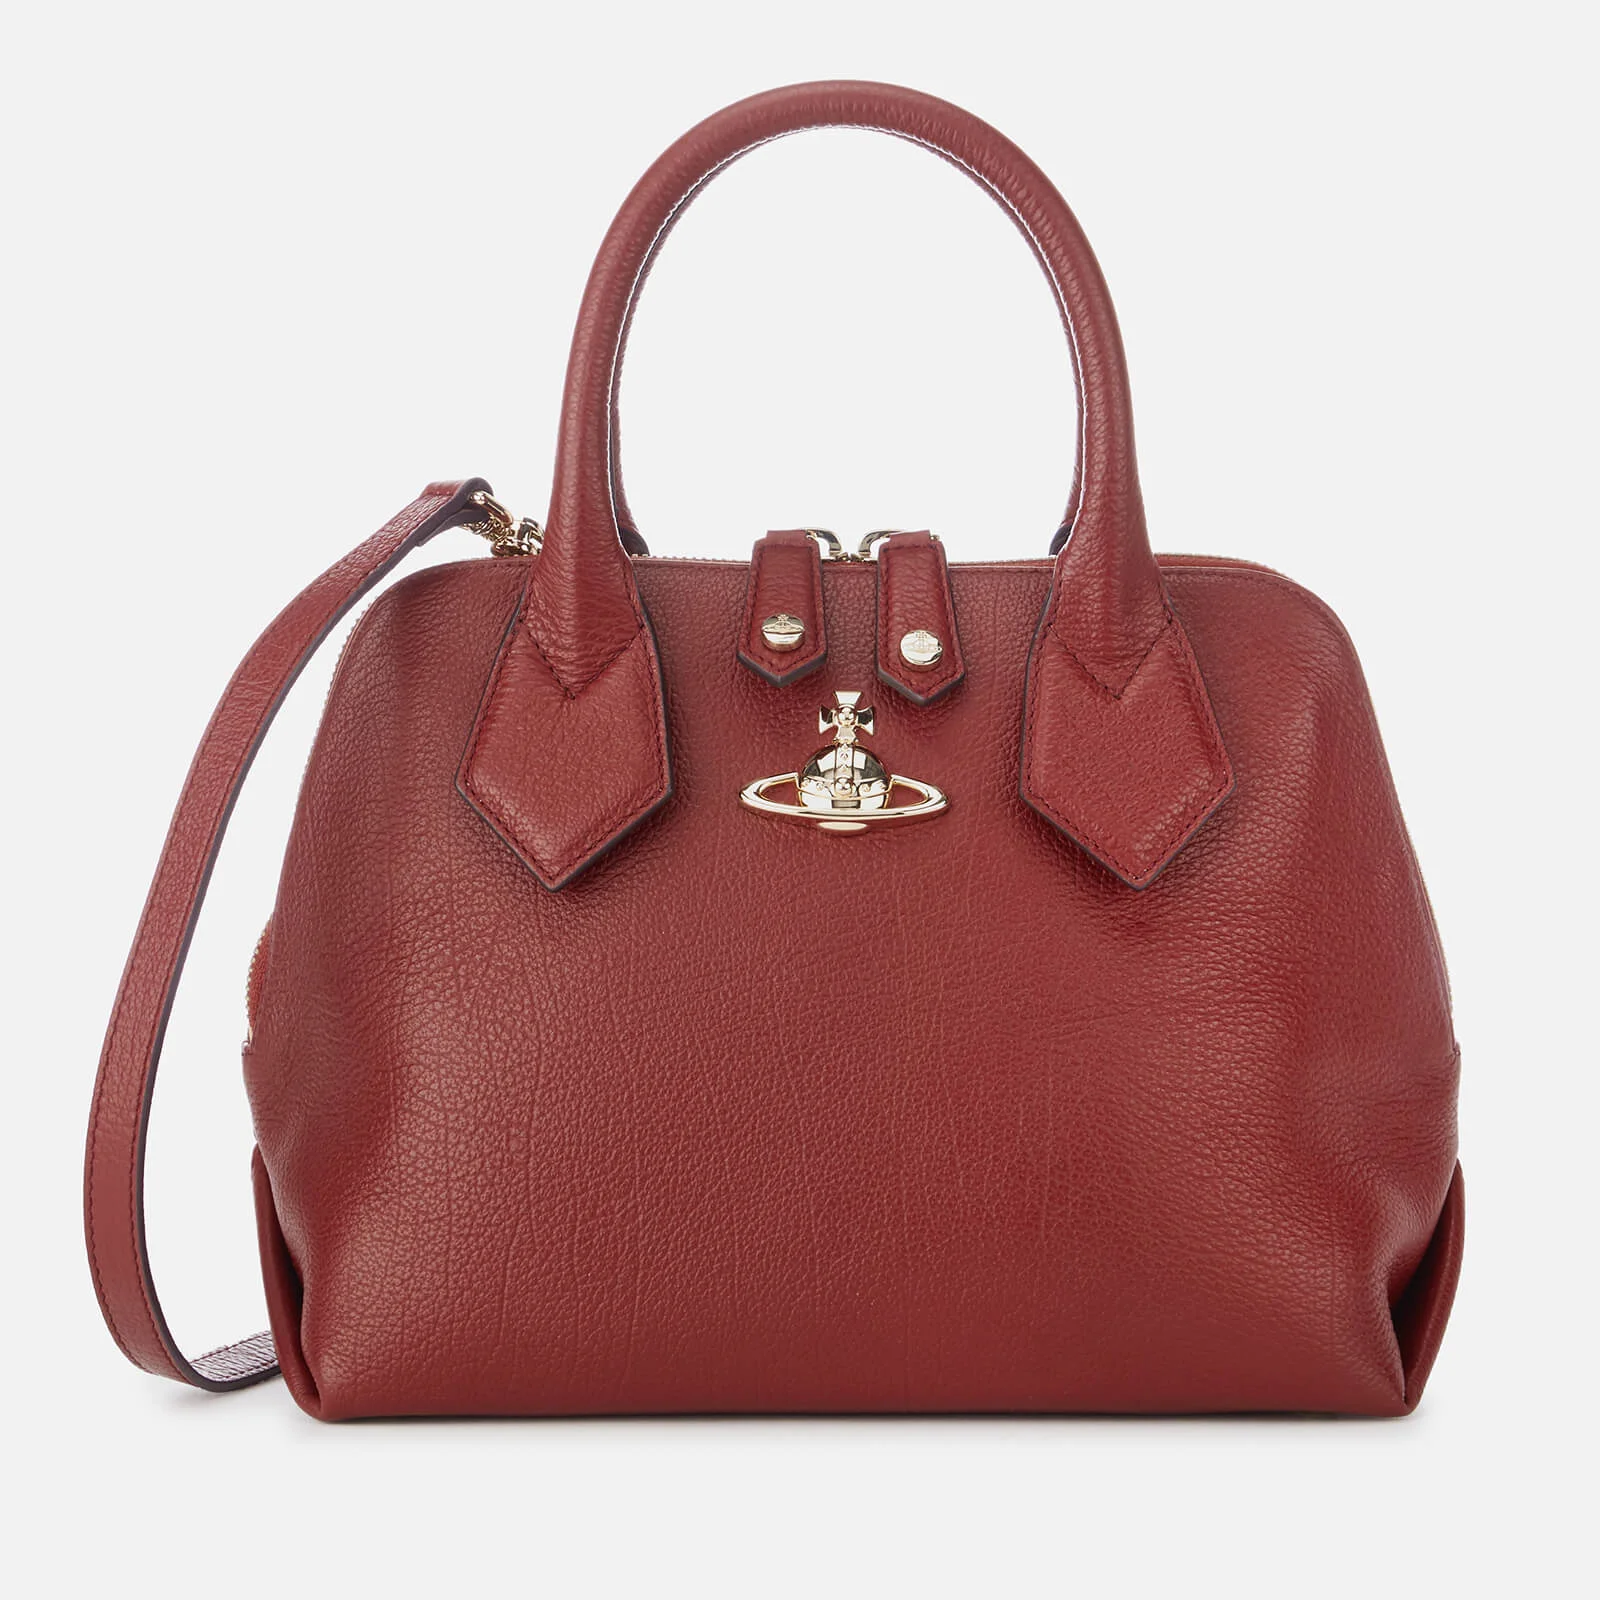 Vivienne Westwood Women's Balmoral Small Handbag - Burgundy Image 1